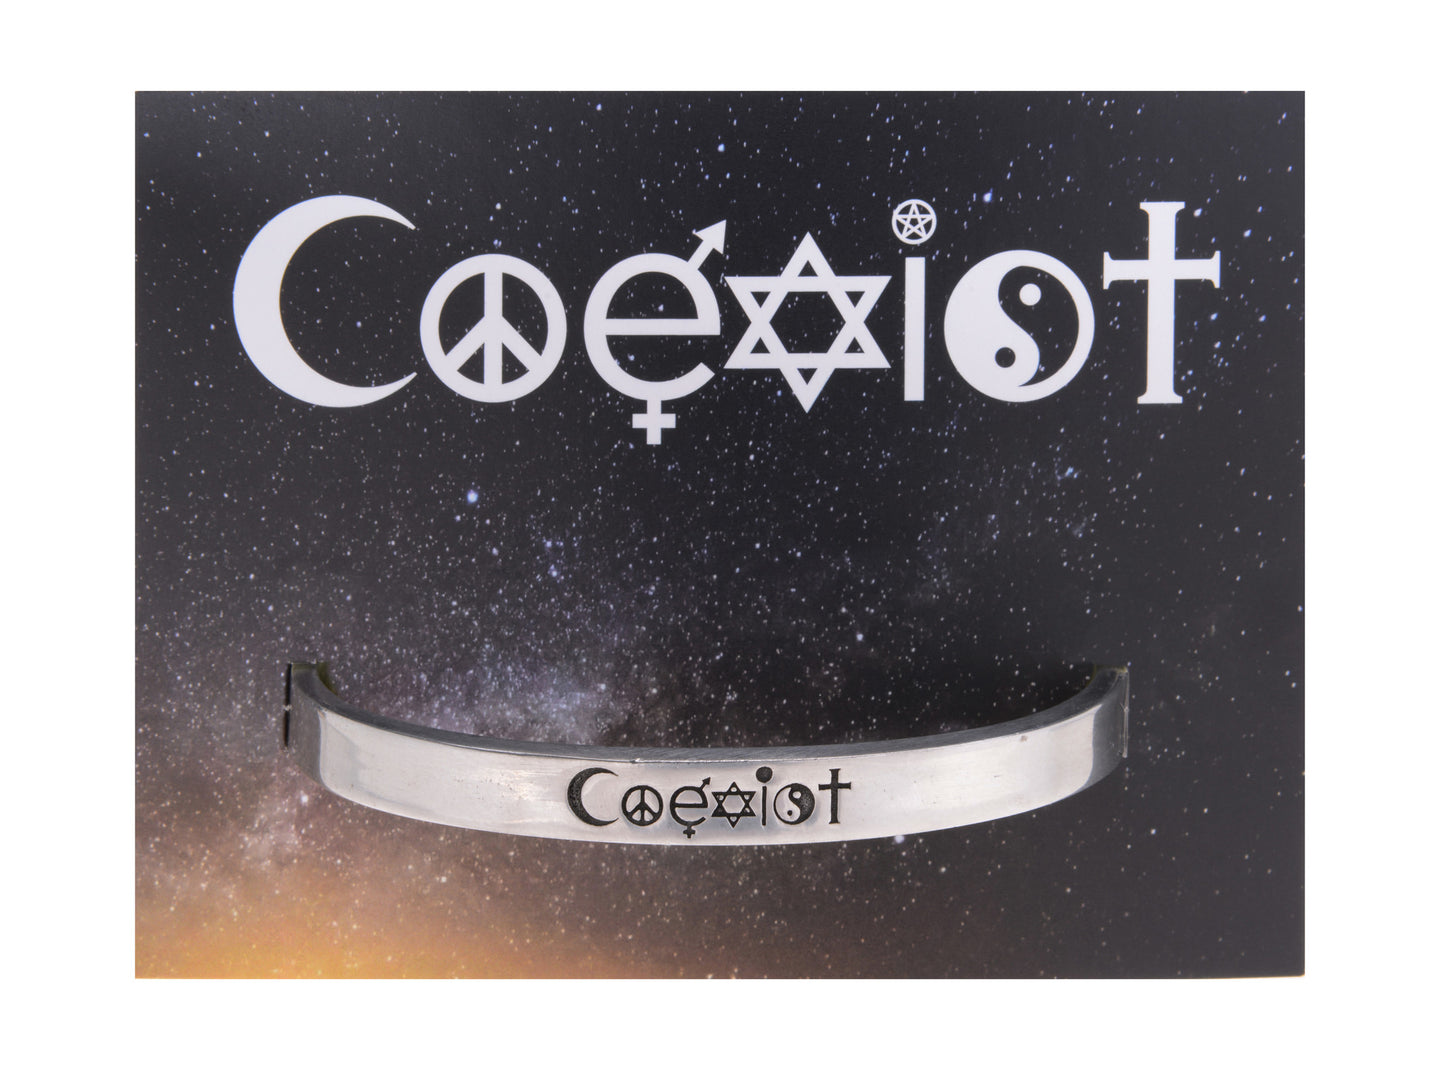 Coexist Quotable Cuff Bracelet on backer card